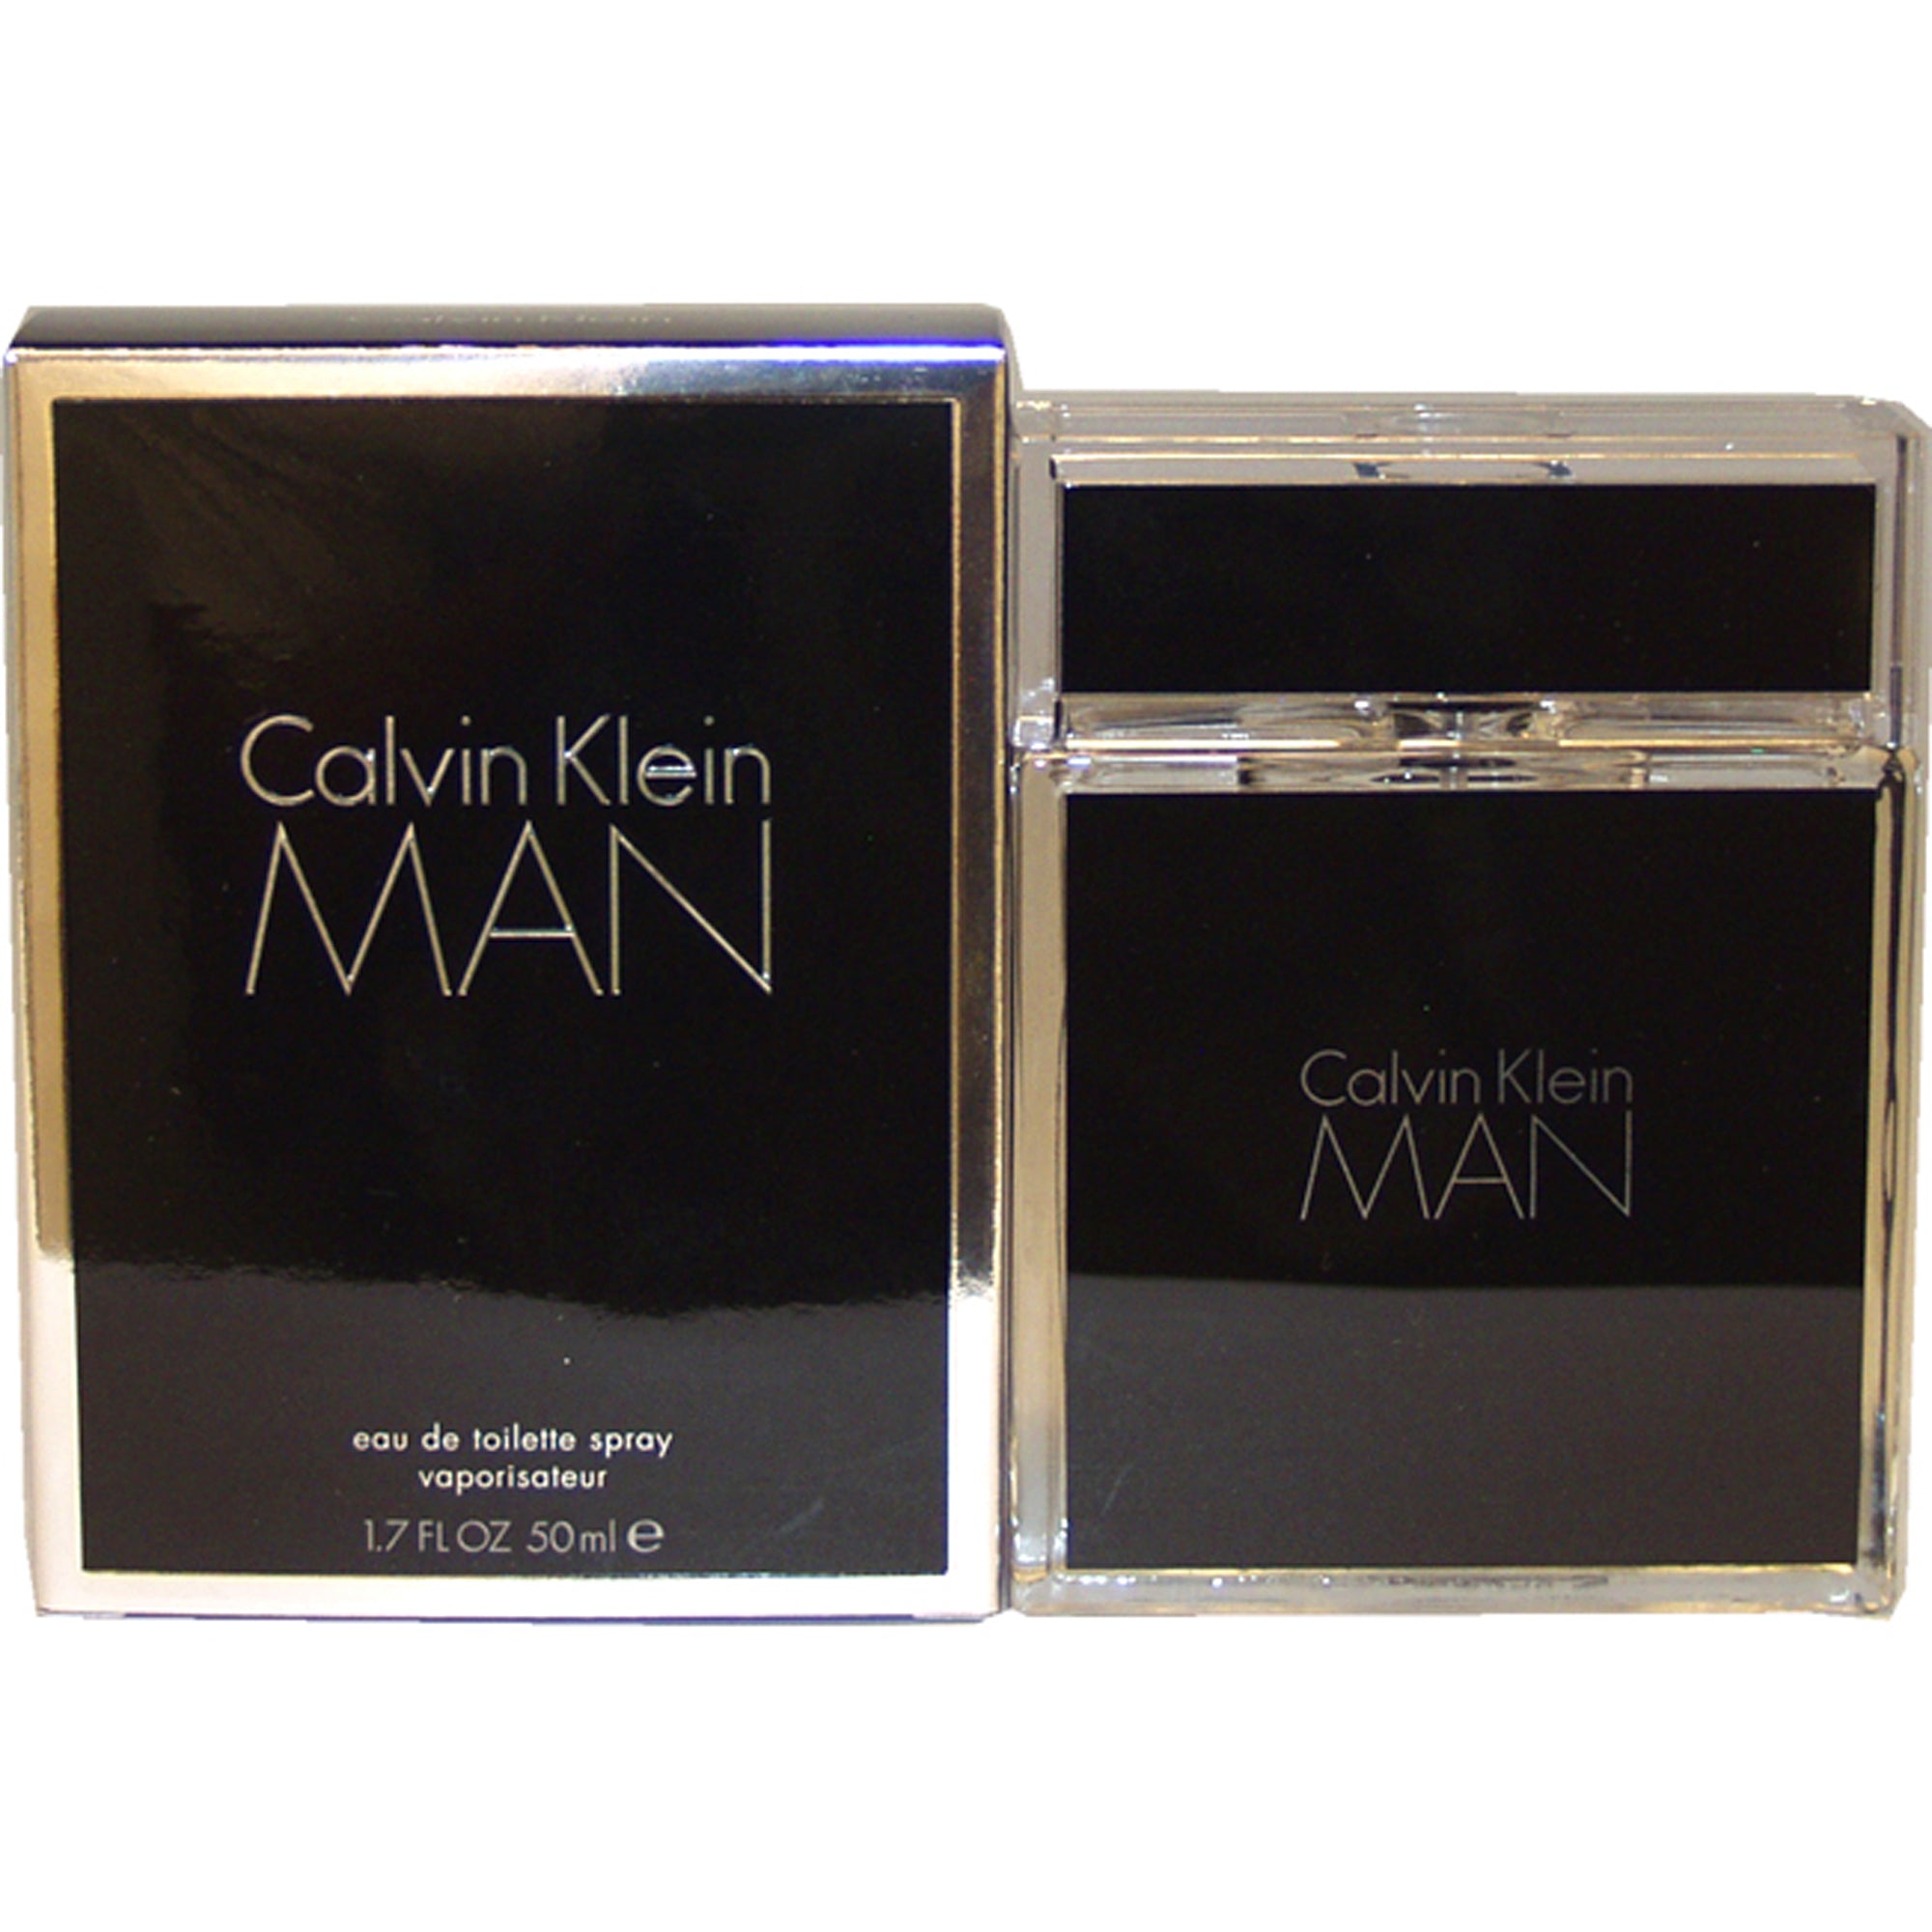 Calvin Klein Man by Calvin Klein for Men - 1.7 oz EDT Spray